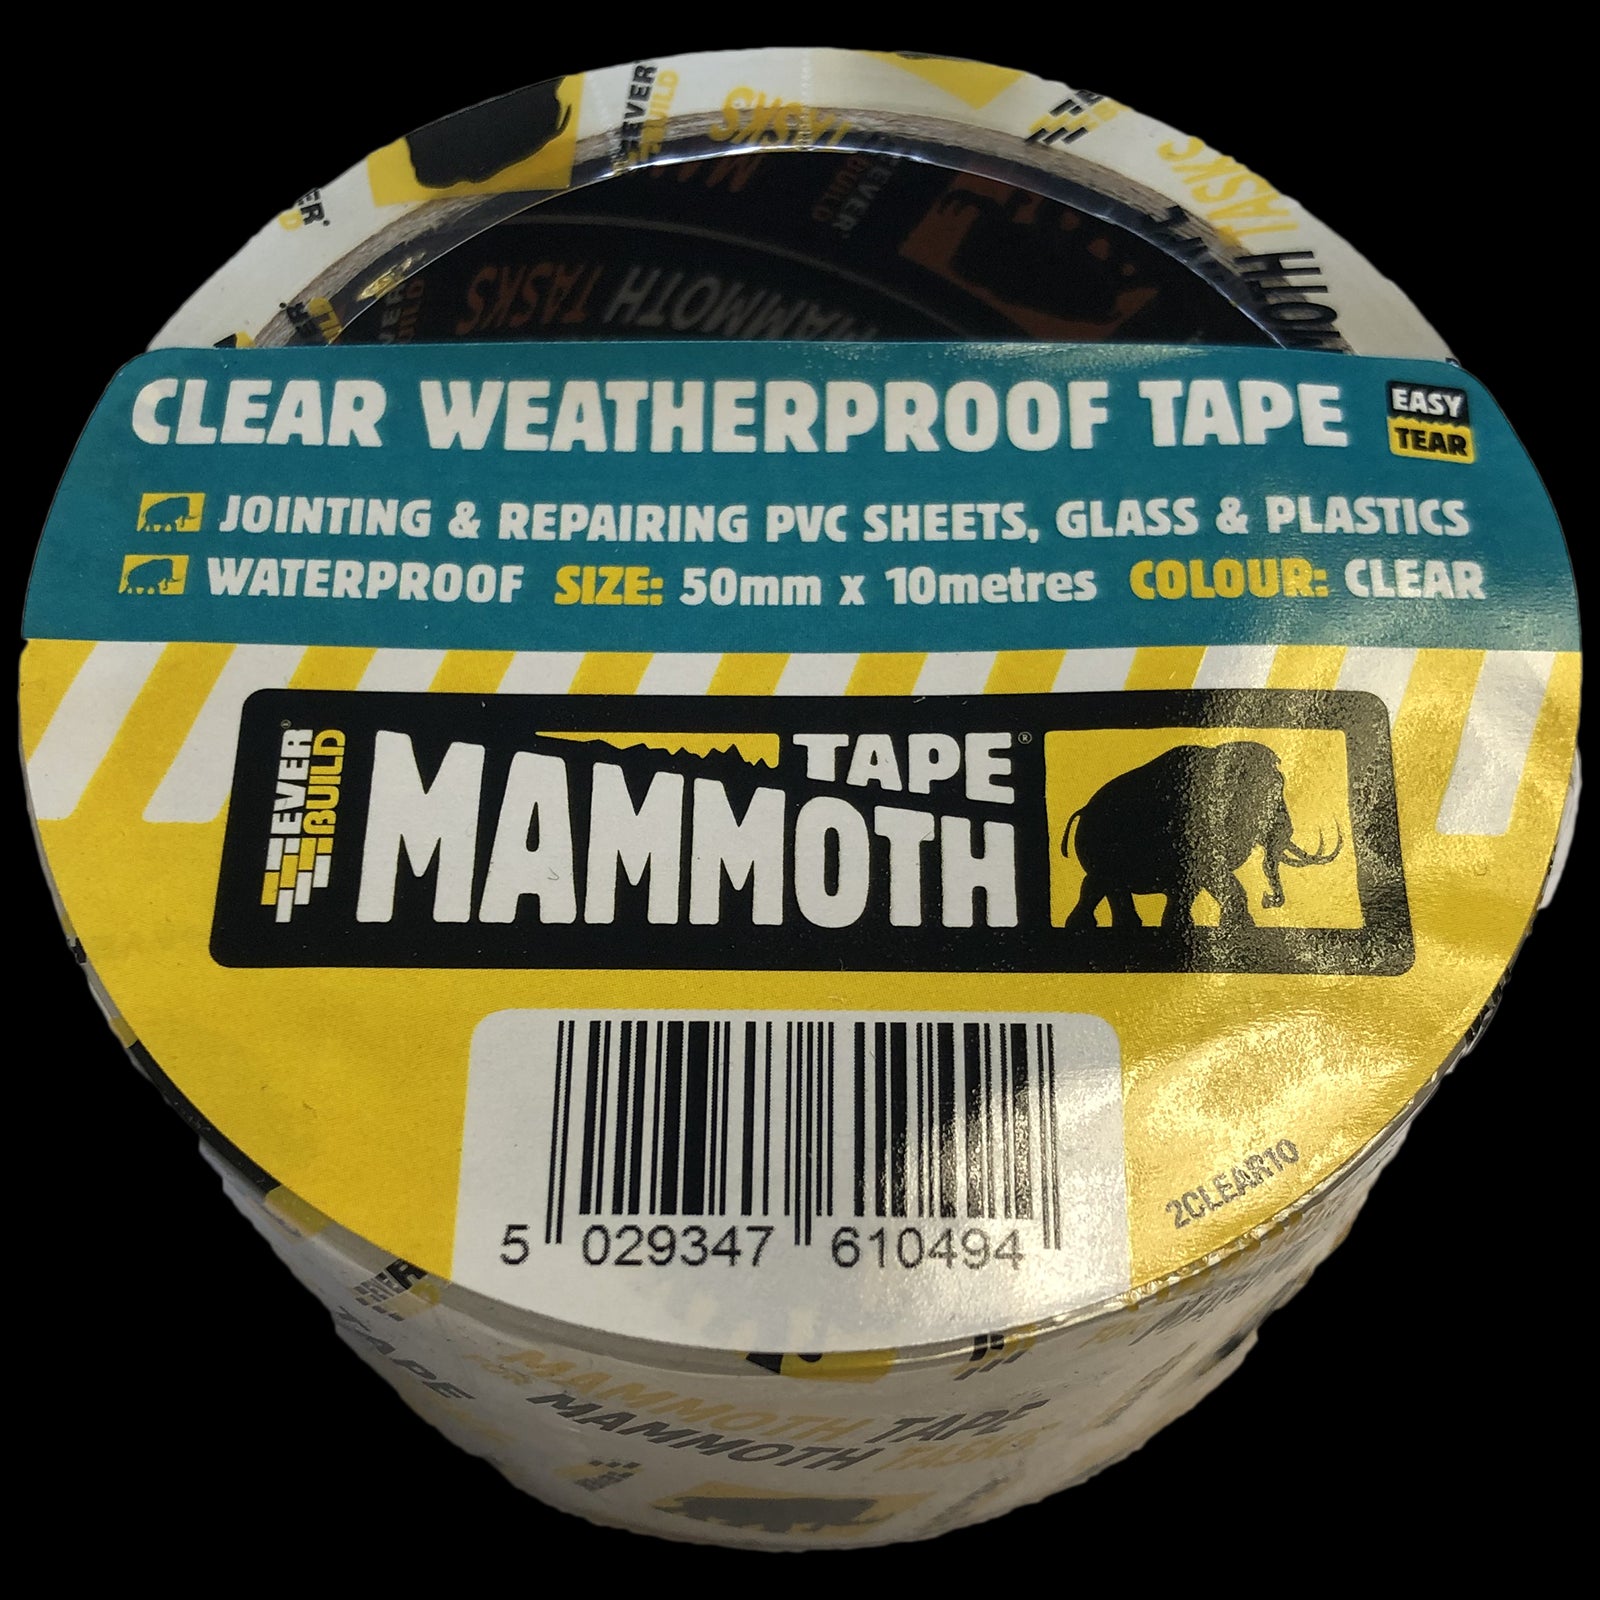 EverBuild Clear Weatherproof Tape Mammoth 50mm x 10m Easy Tear Waterproof